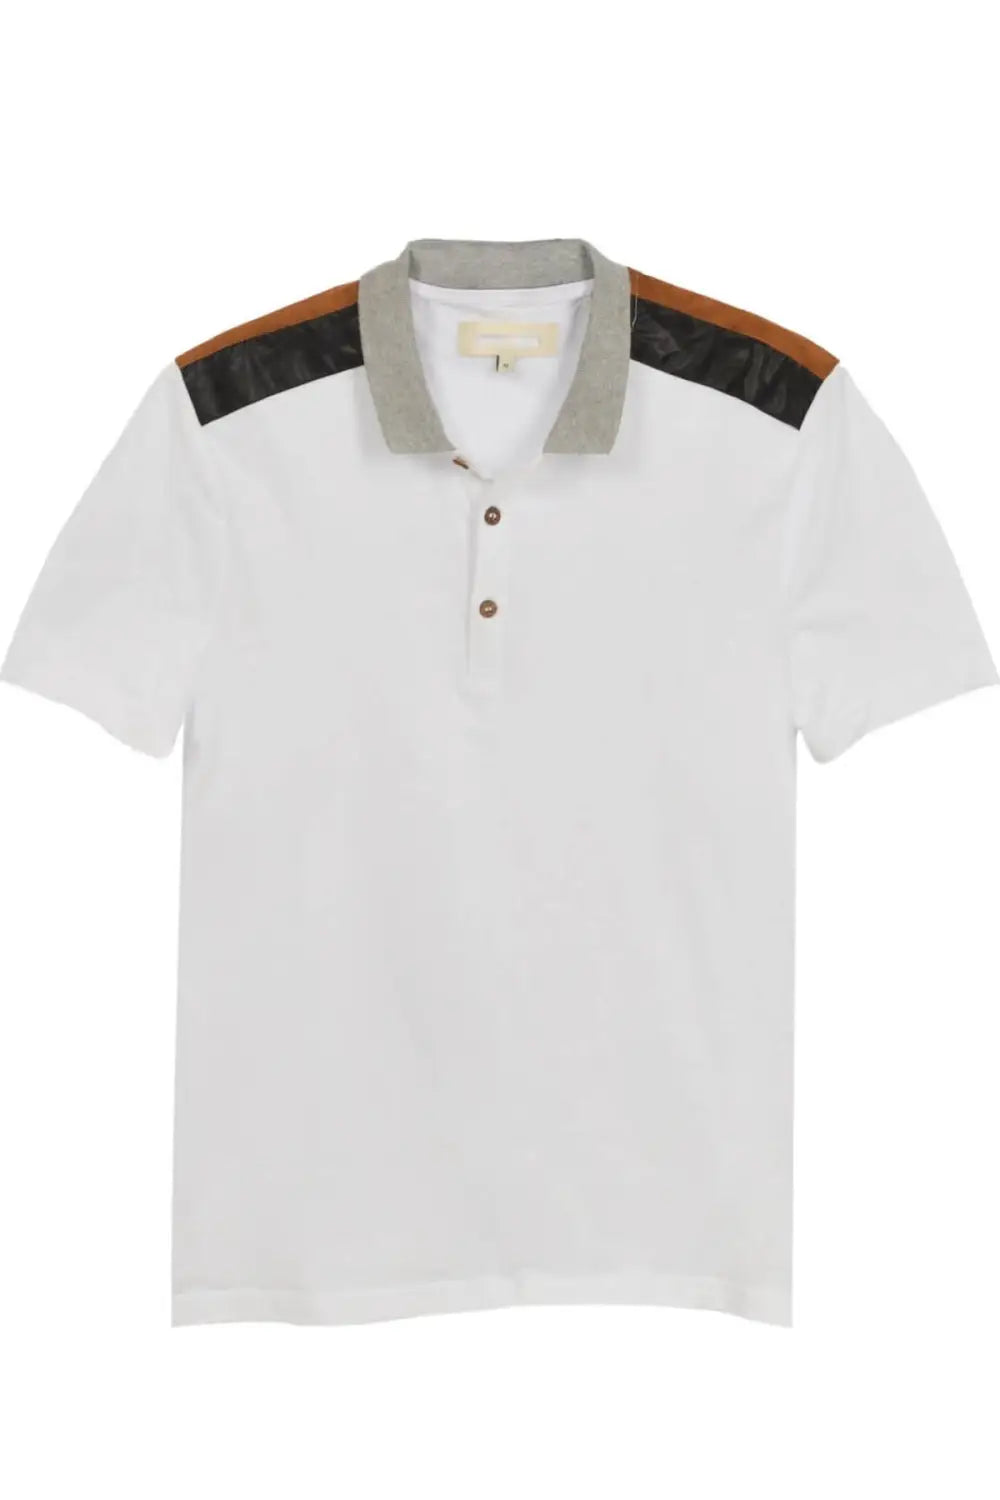 River Island Polo Shirt Contrast Shoulder